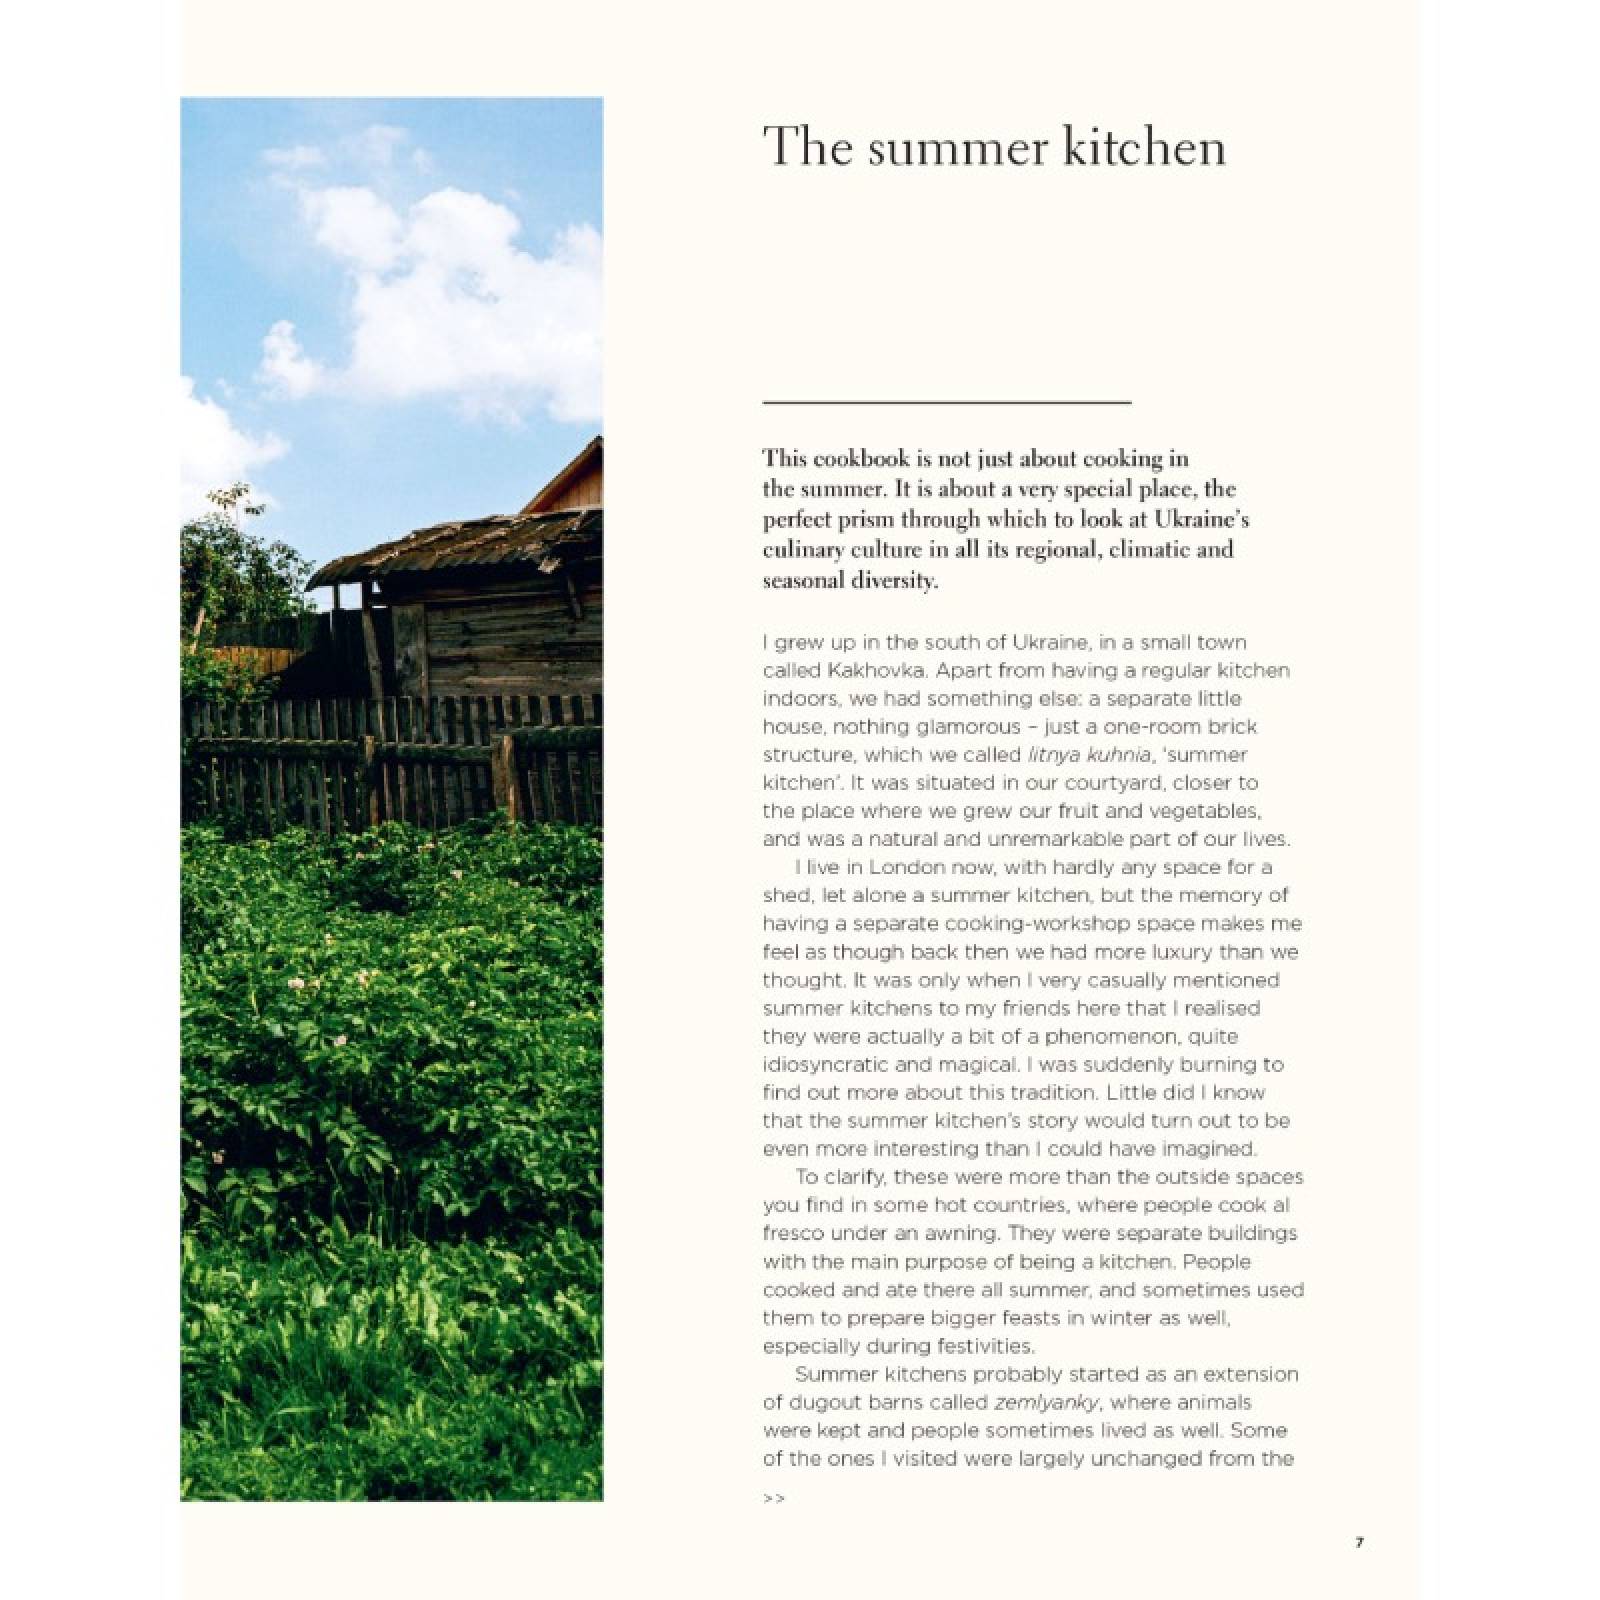 Summer Kitchens By Olia Hercules - Hardback Book thumbnails